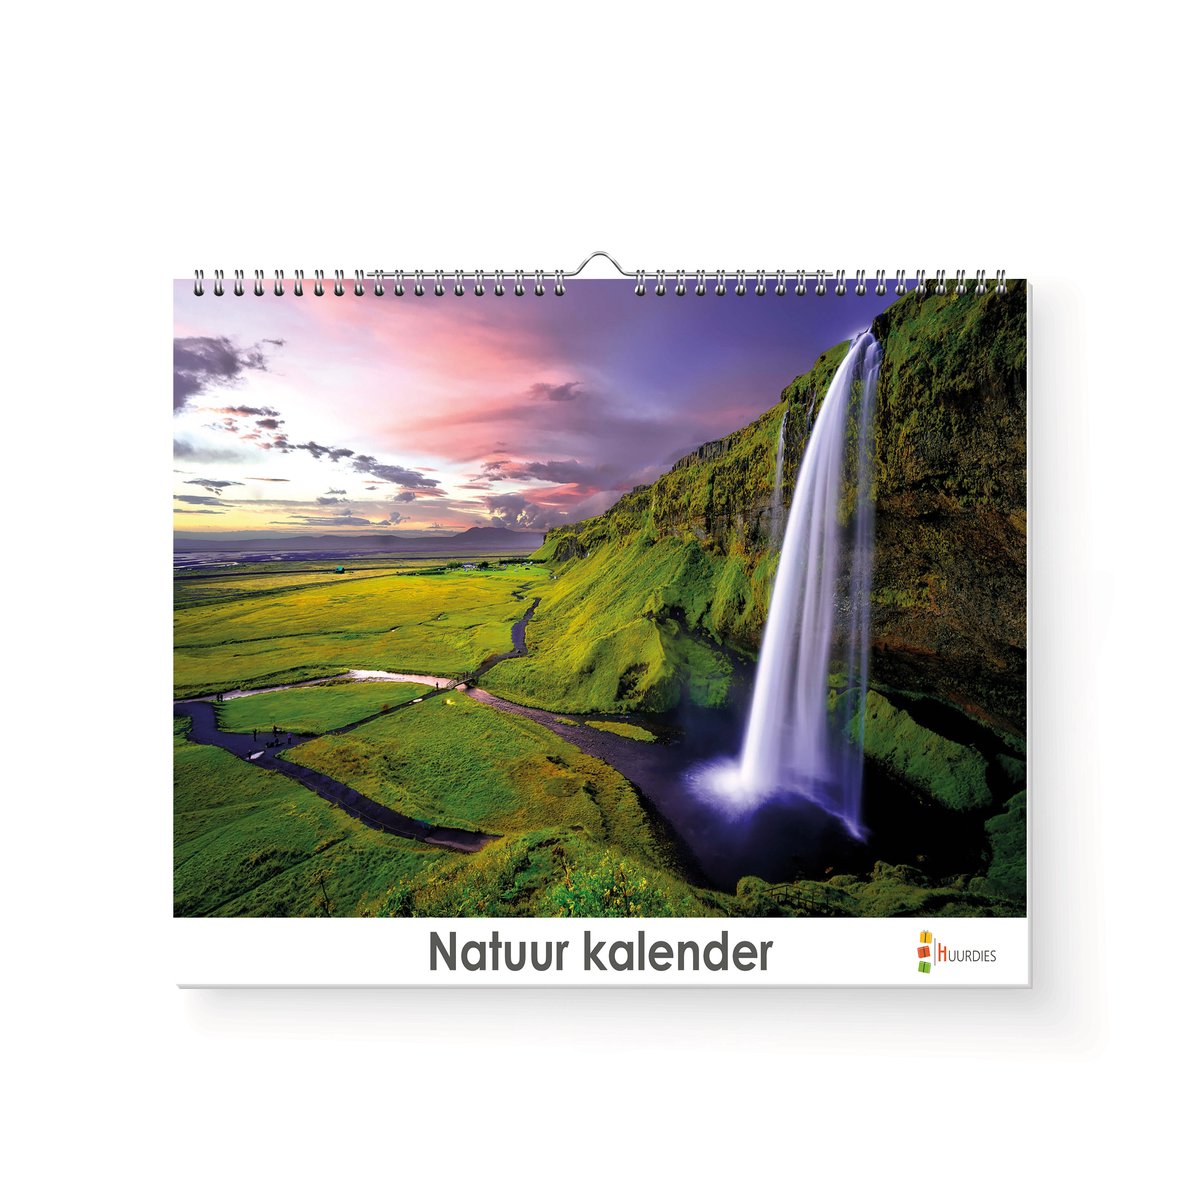 Natuurkalender 35x24 cm | Verjaardagskalender Natuur | Verjaardagskalender Volwassenen - Huurdies